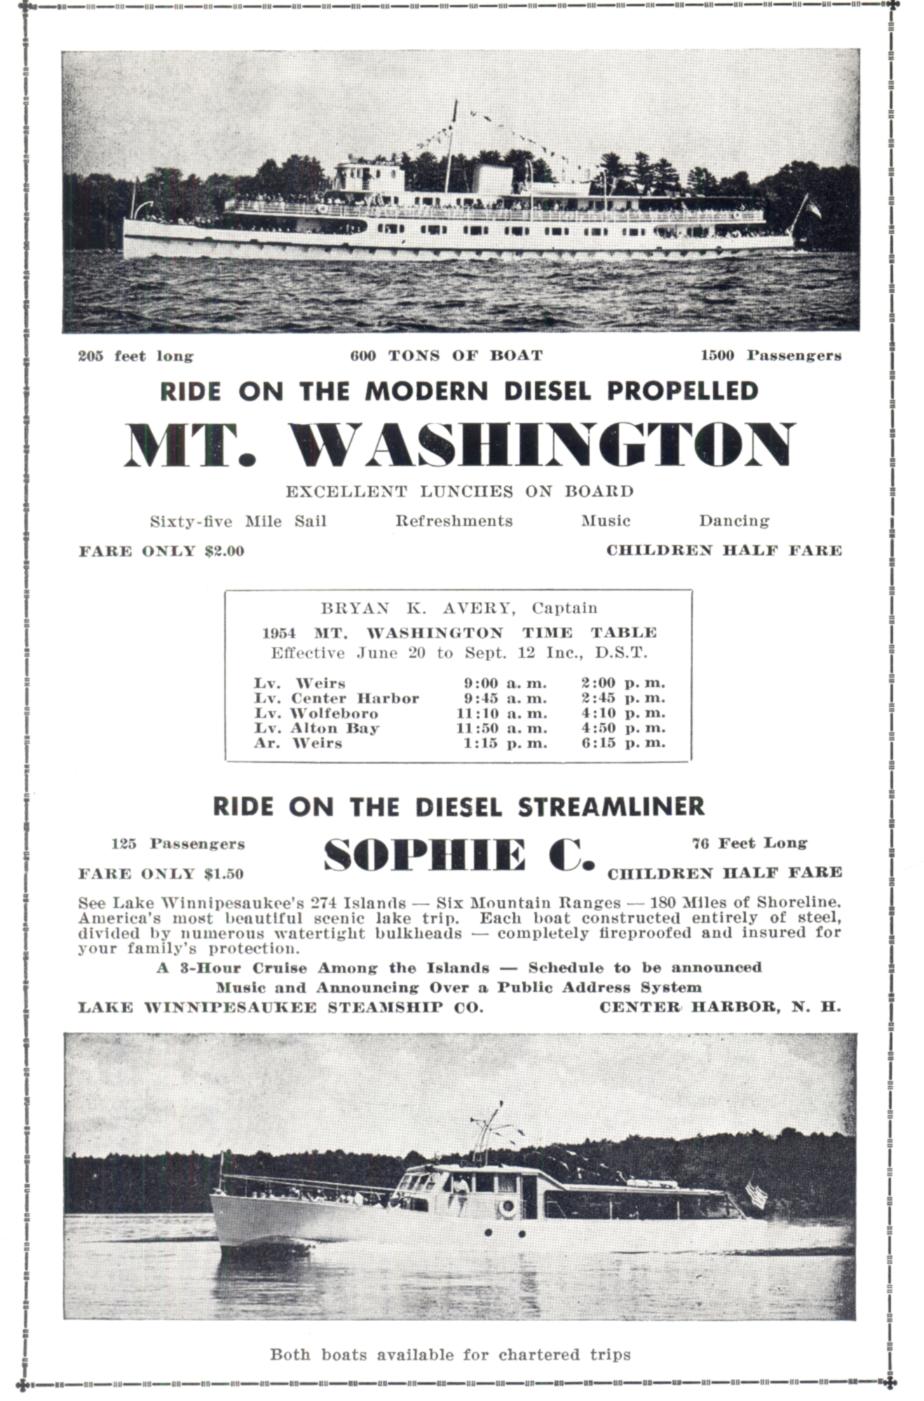 MS Mount Washington Time Table 1954